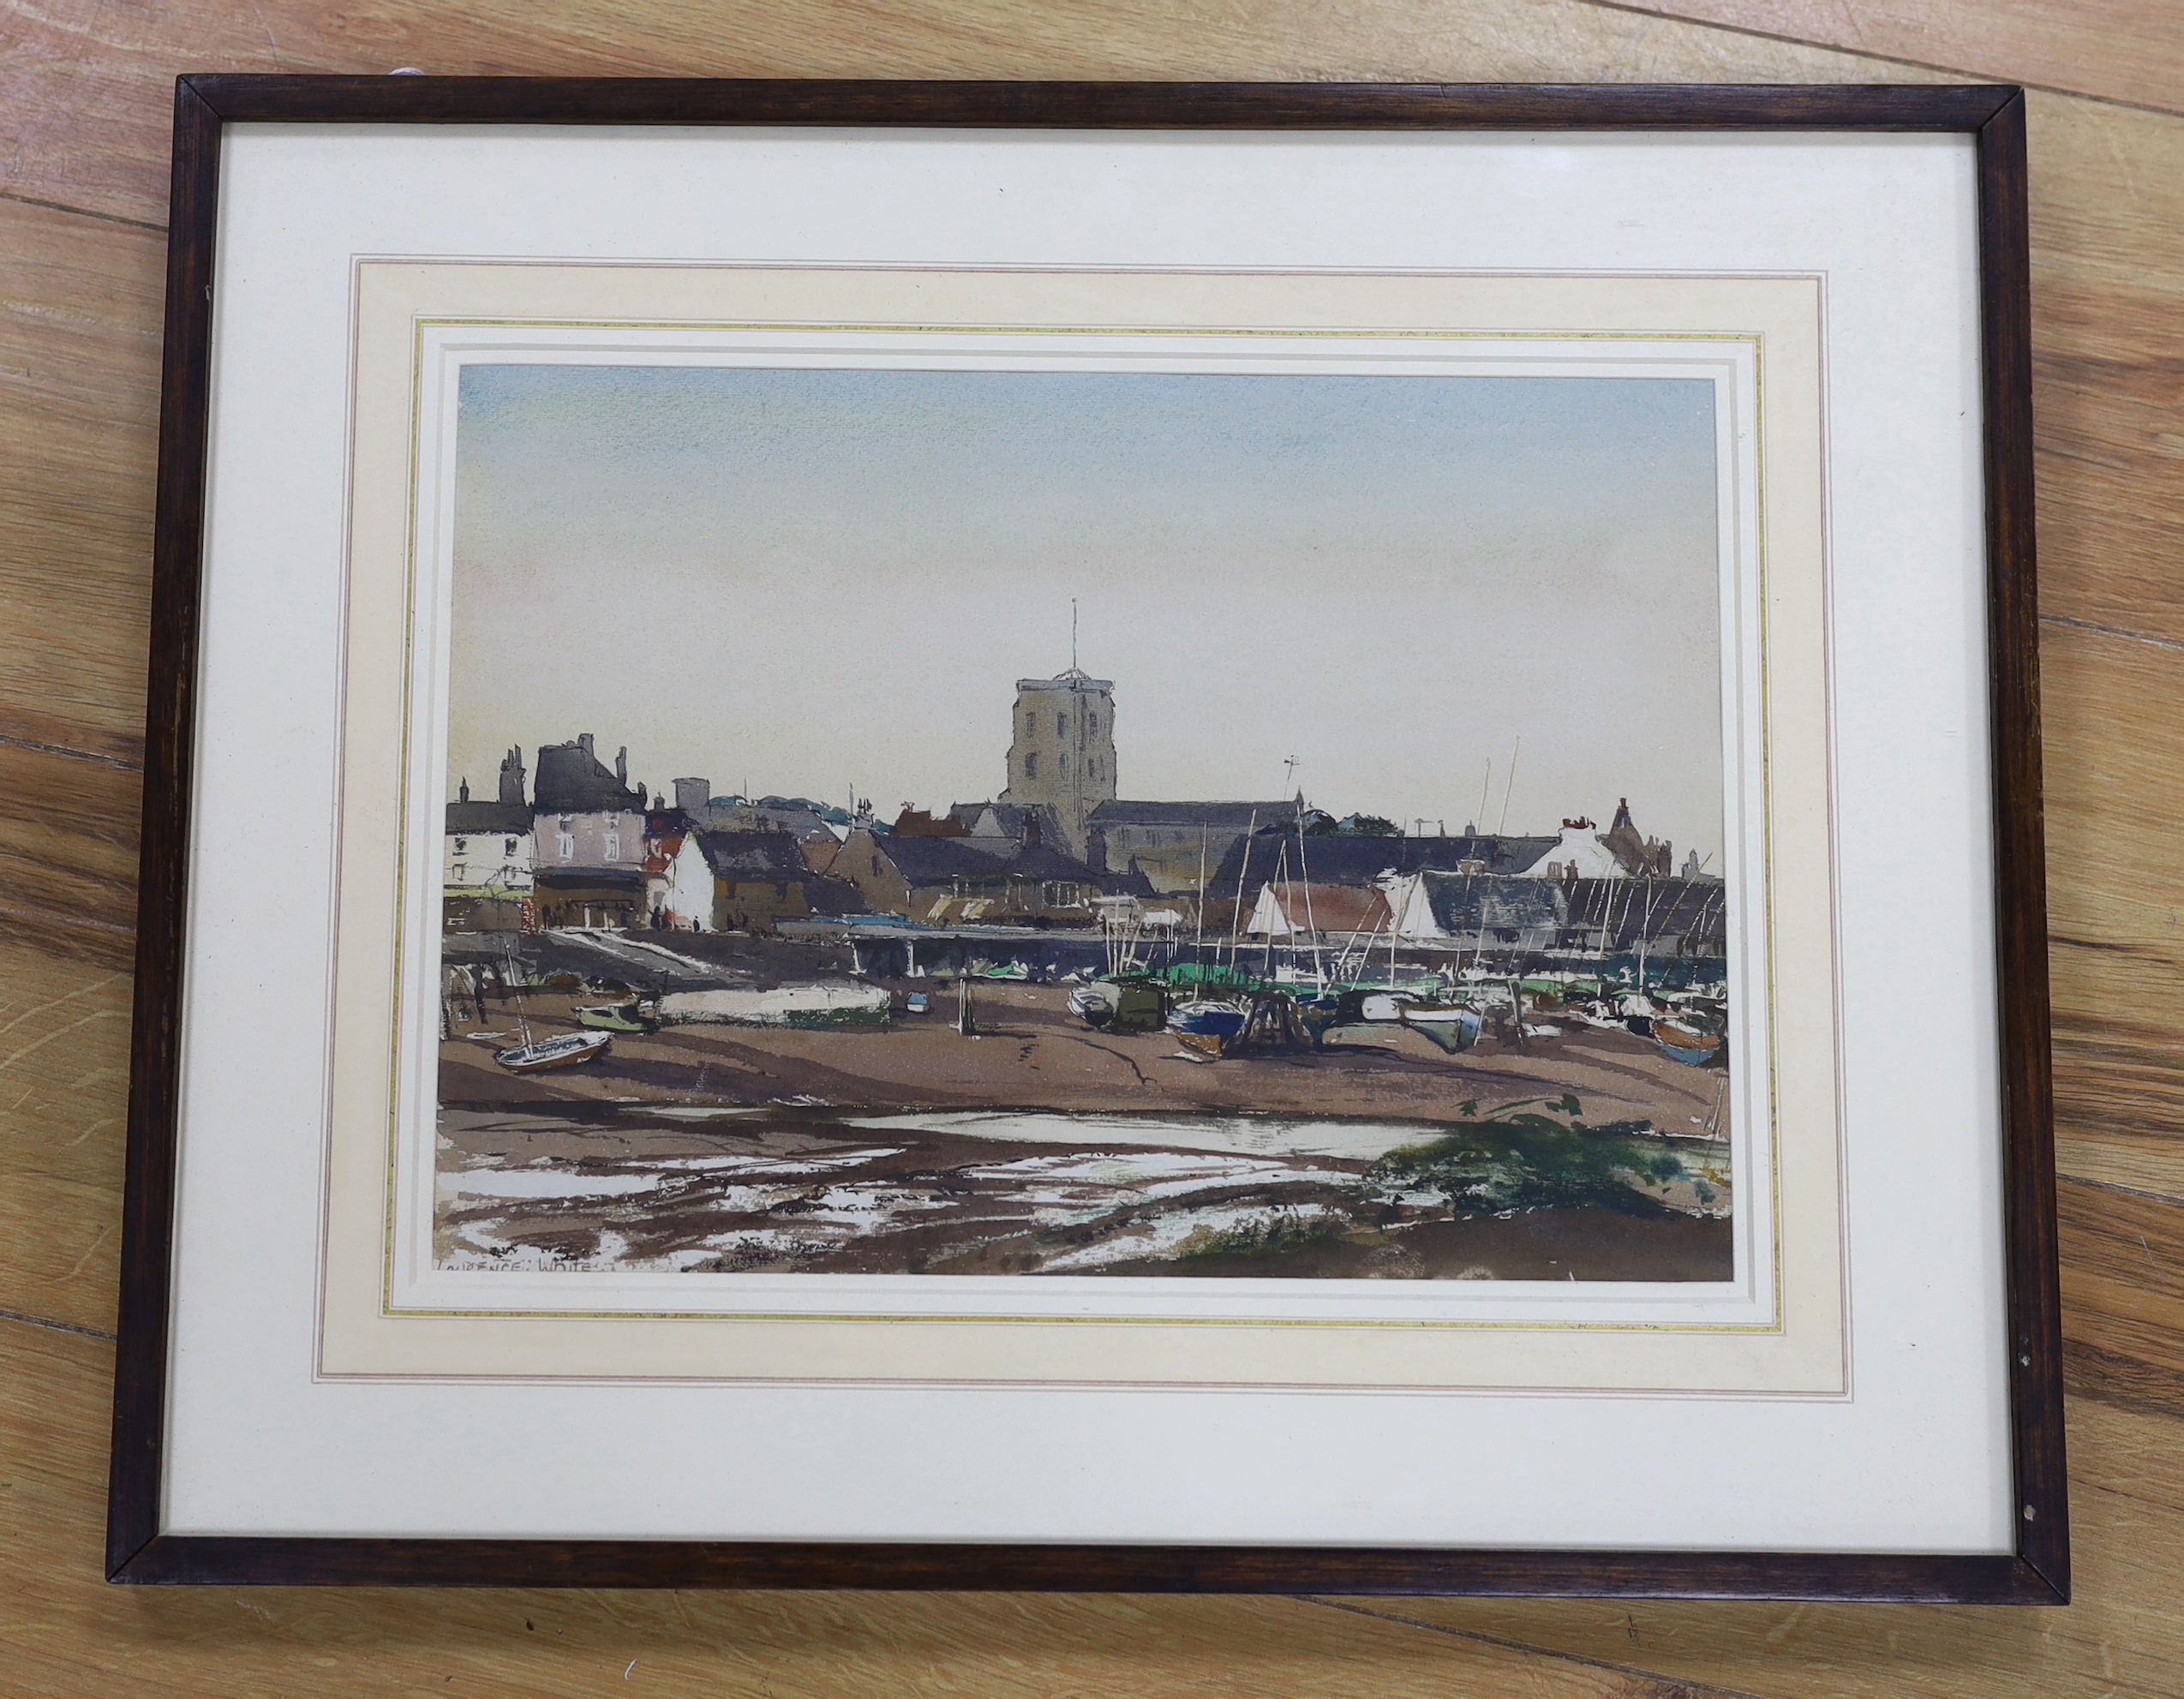 Laurence White (1914-1974), watercolour, Shoreham at low tide, signed, 5 x 35cm